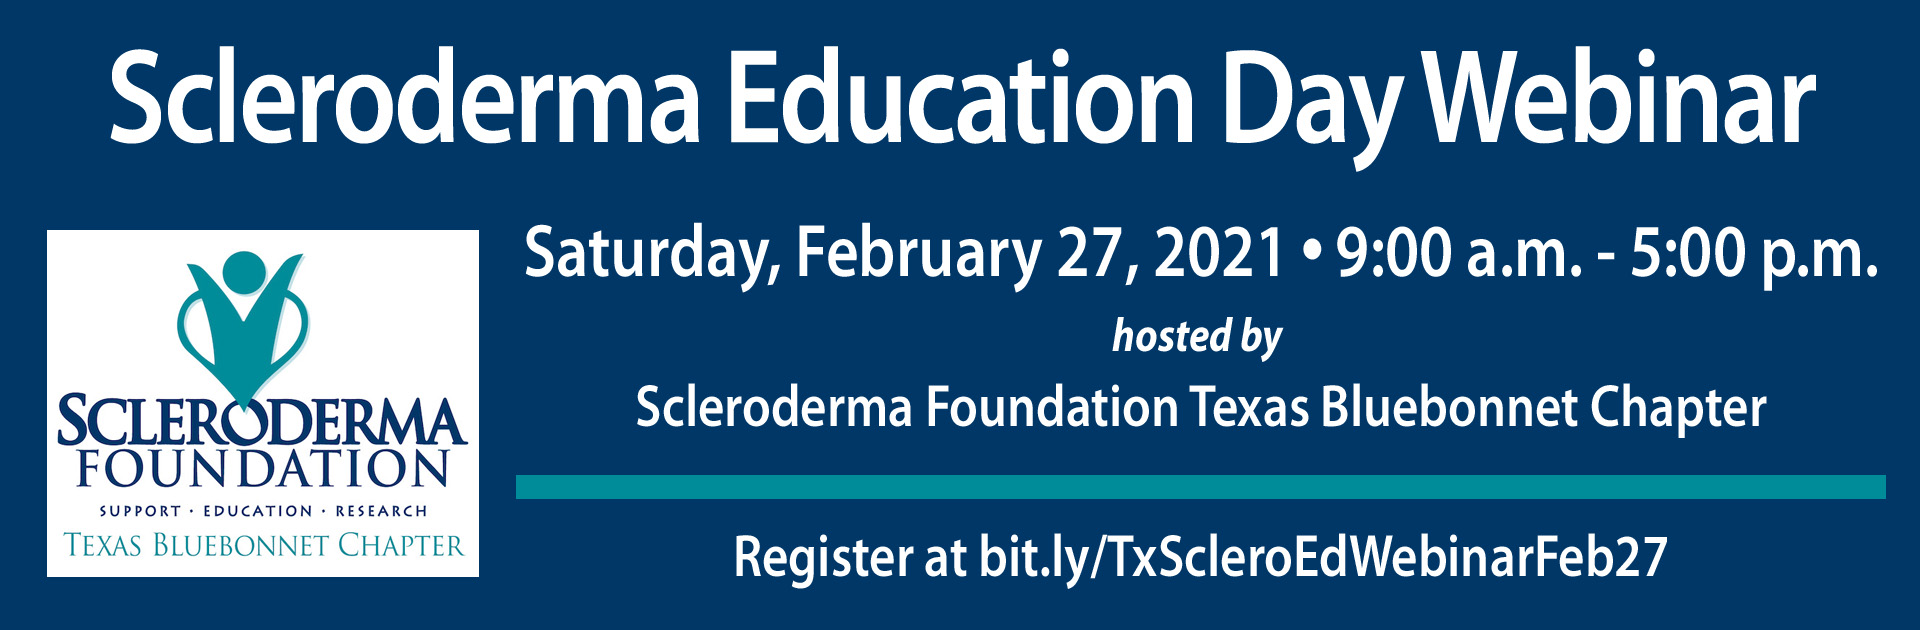 2021 Texas Scleroderma Education Day Webinar - February 27,